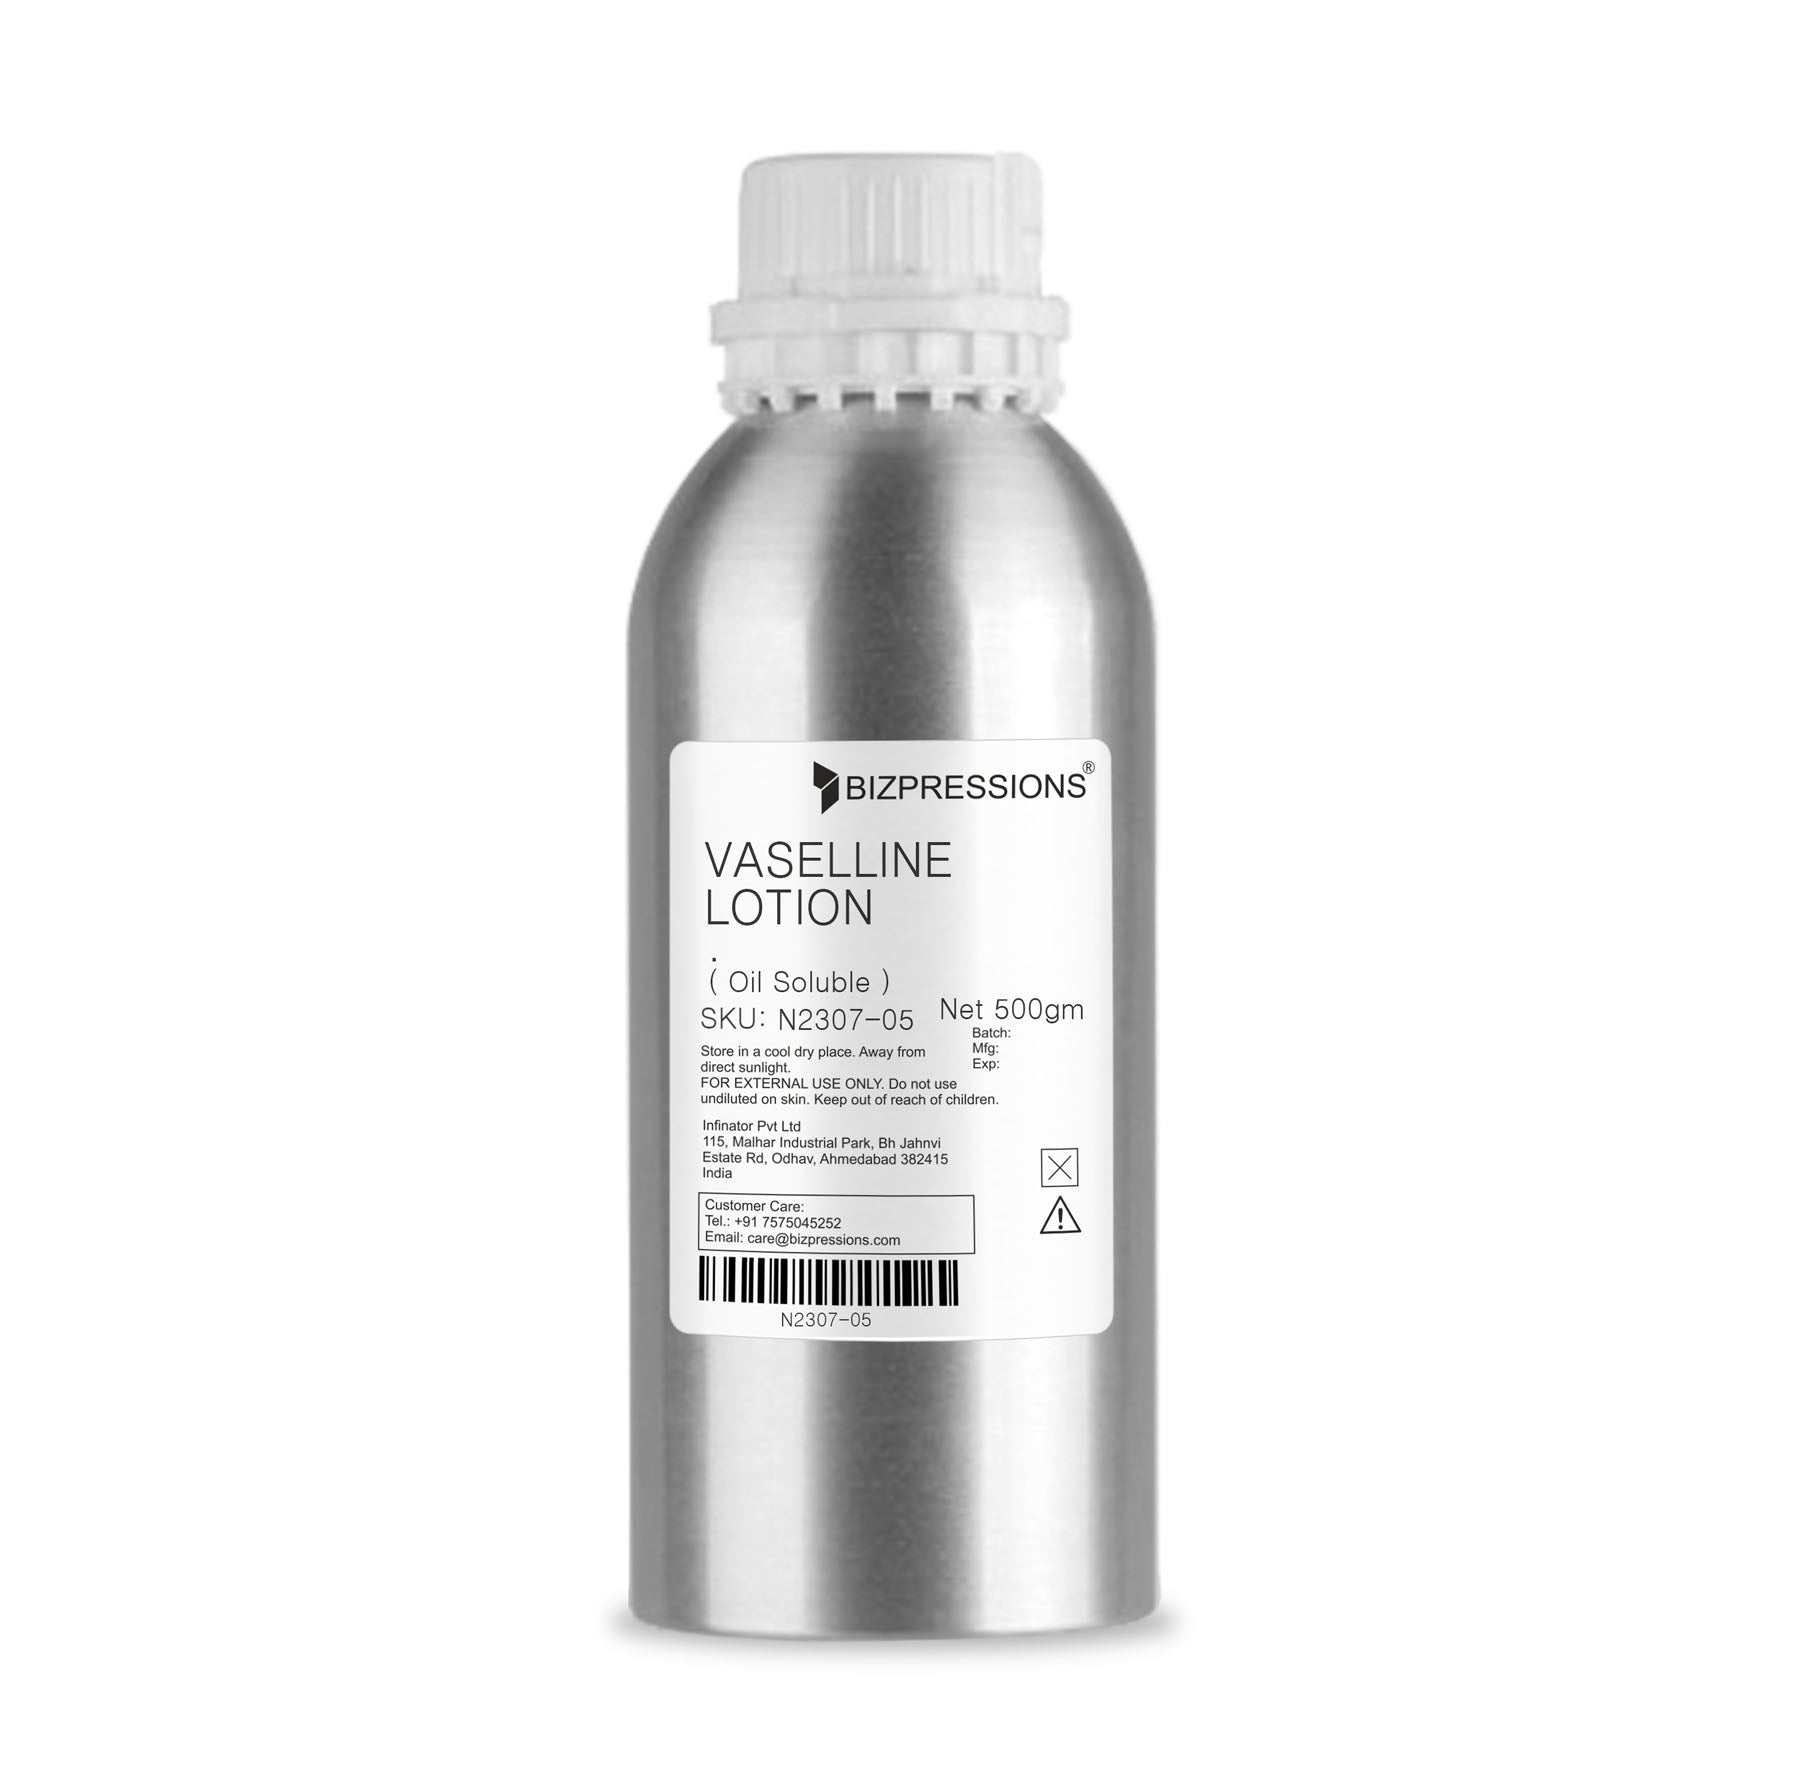 VASELLINE - Fragrance ( Oil Soluble ) - 500 gm